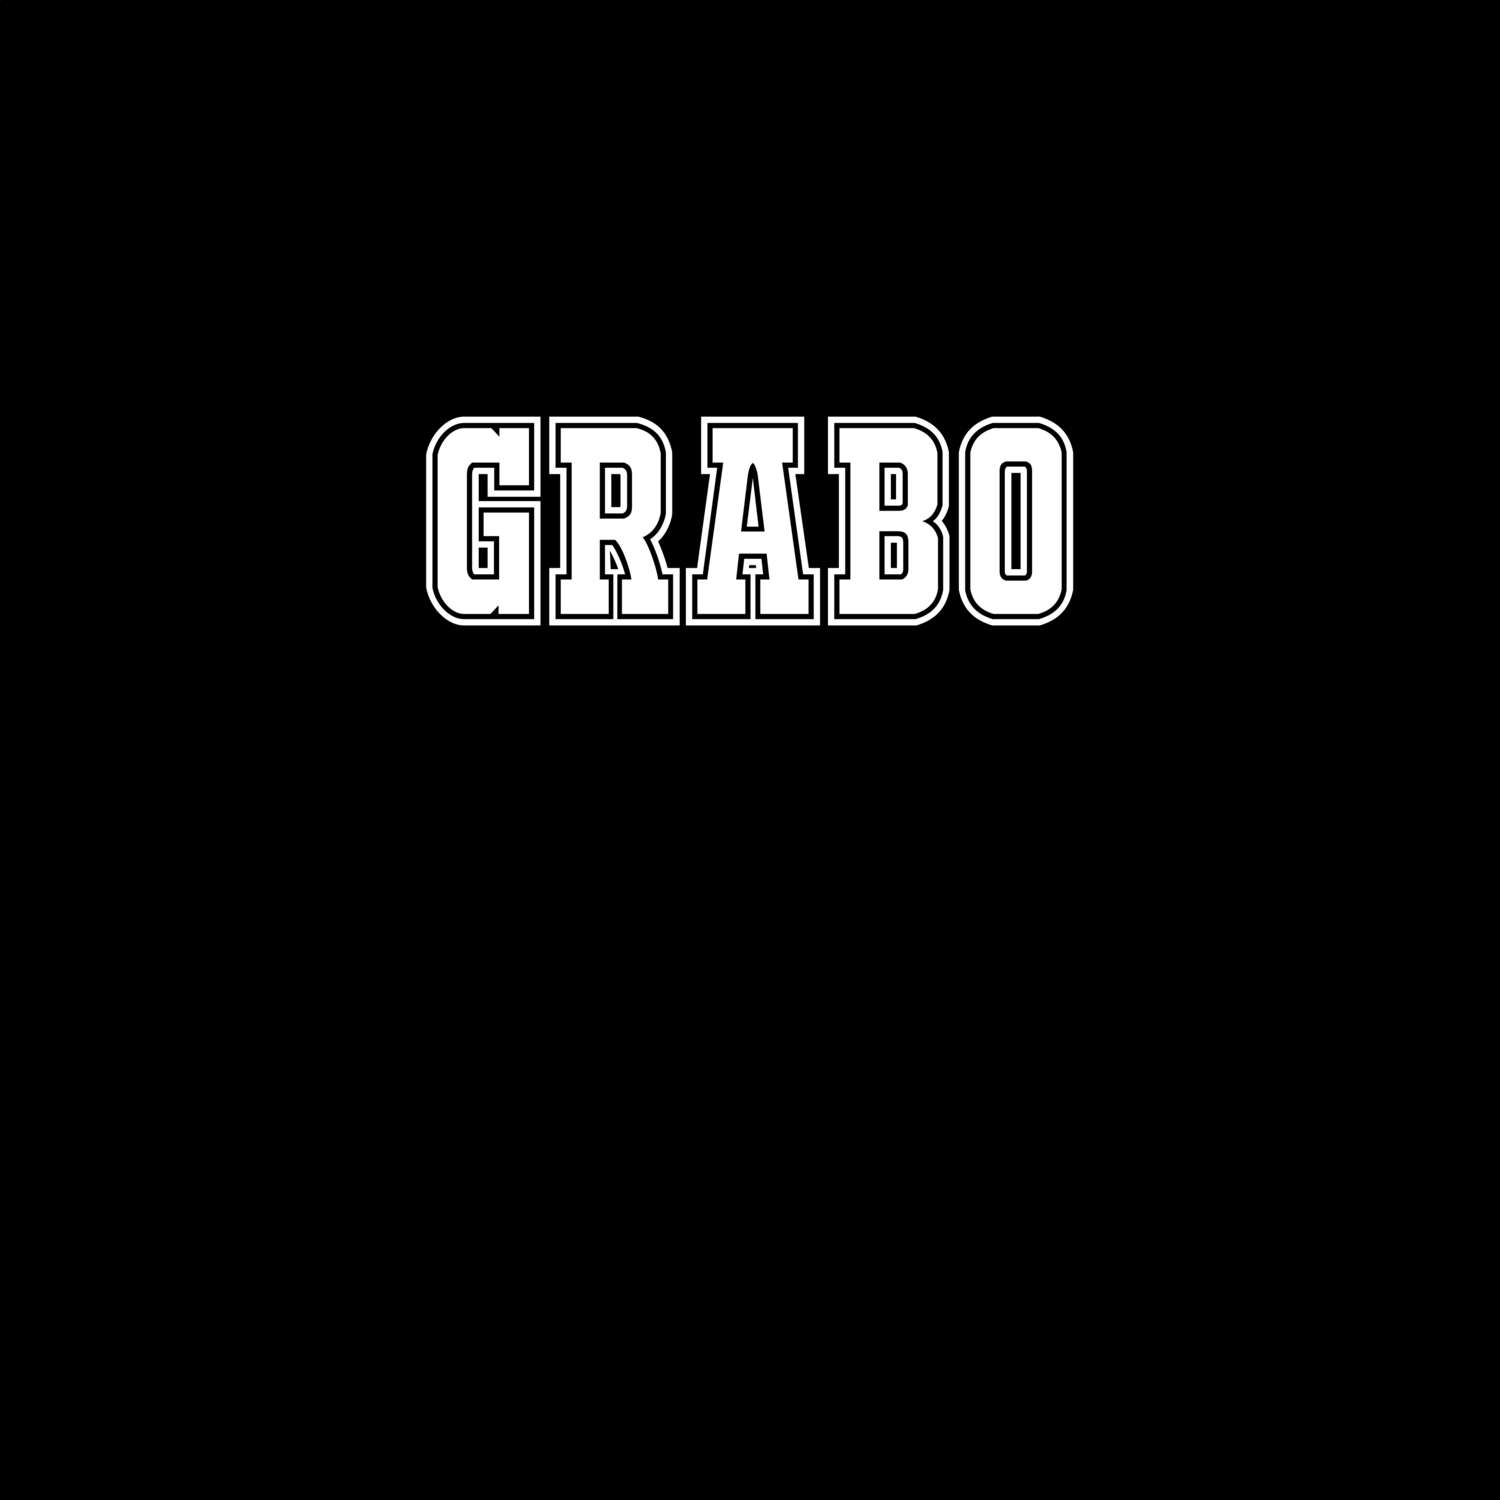 Grabo T-Shirt »Classic«